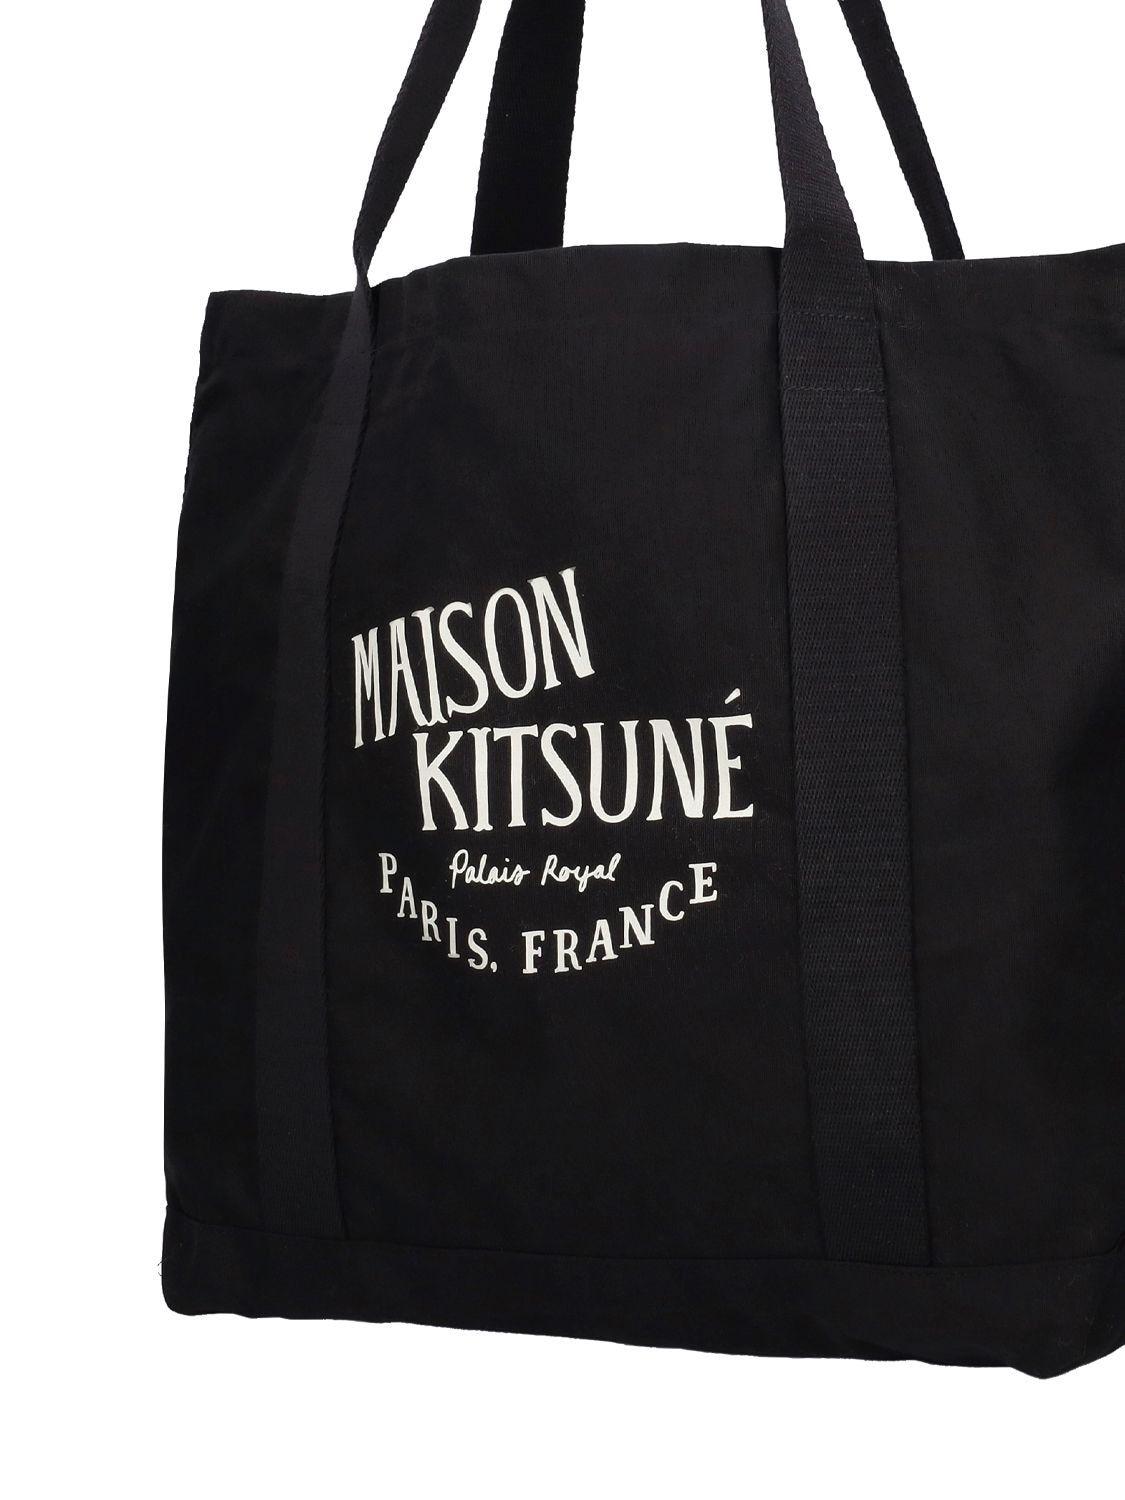 MAISON KITSUNE SHOPPING TOTE BAG PALAIS ROYAL PARIS, FRANCE